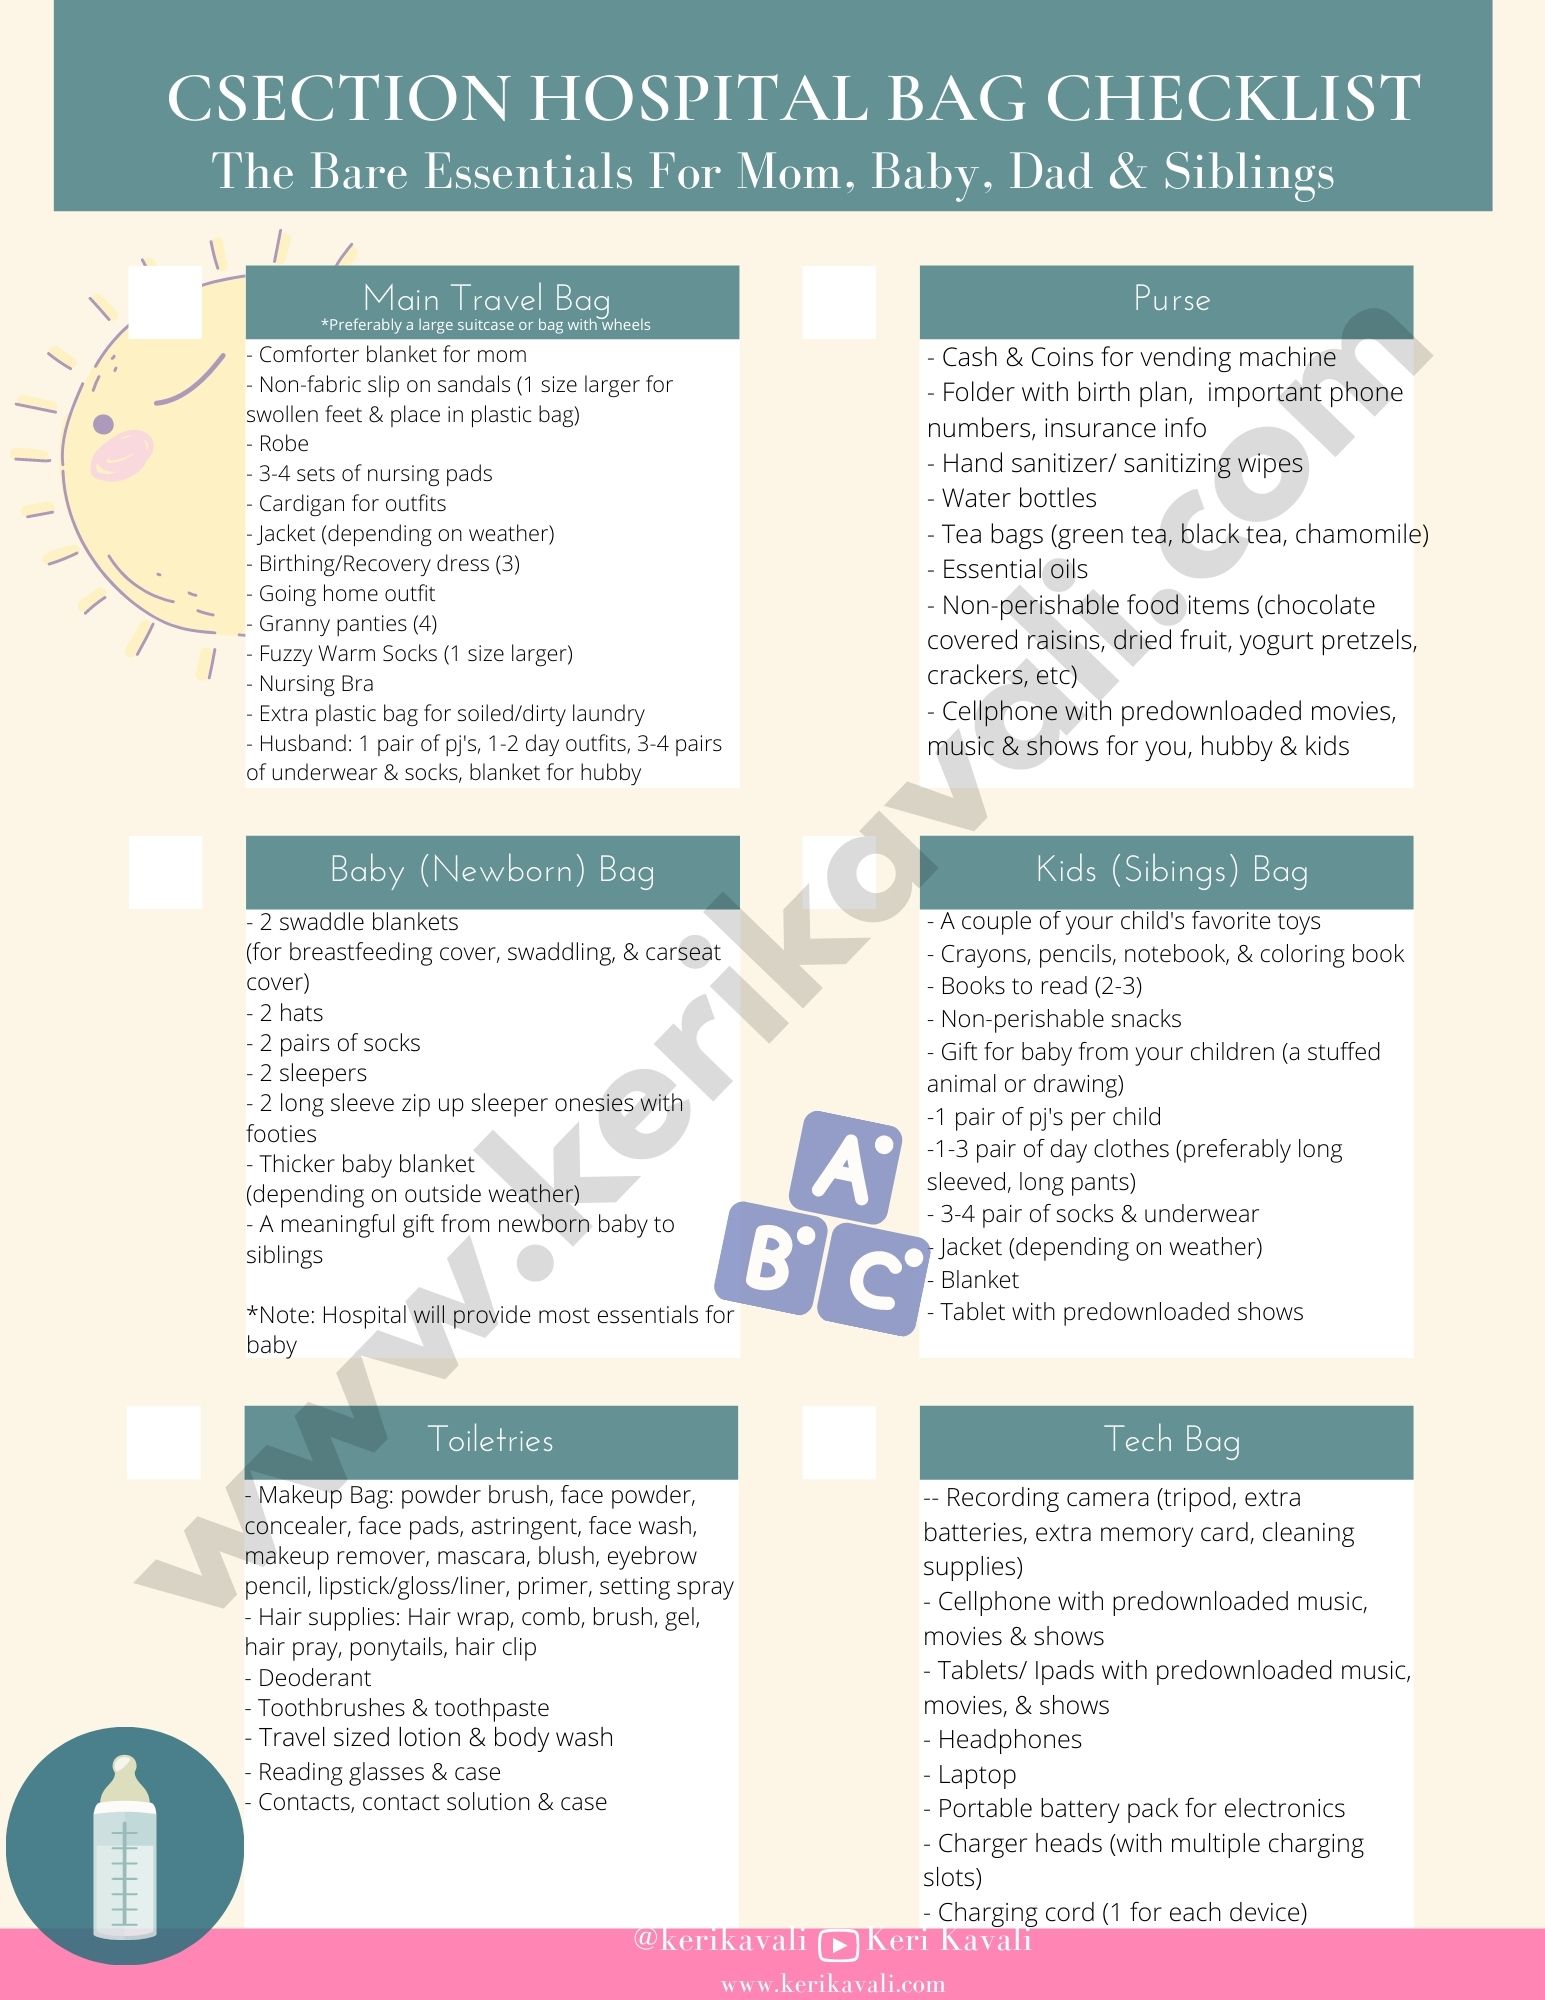 https://kerikavali.com/wp-content/uploads/2020/09/third-c-section-hospital-bag-checklist-photo-keri-kavali-vbac-tolac.jpg